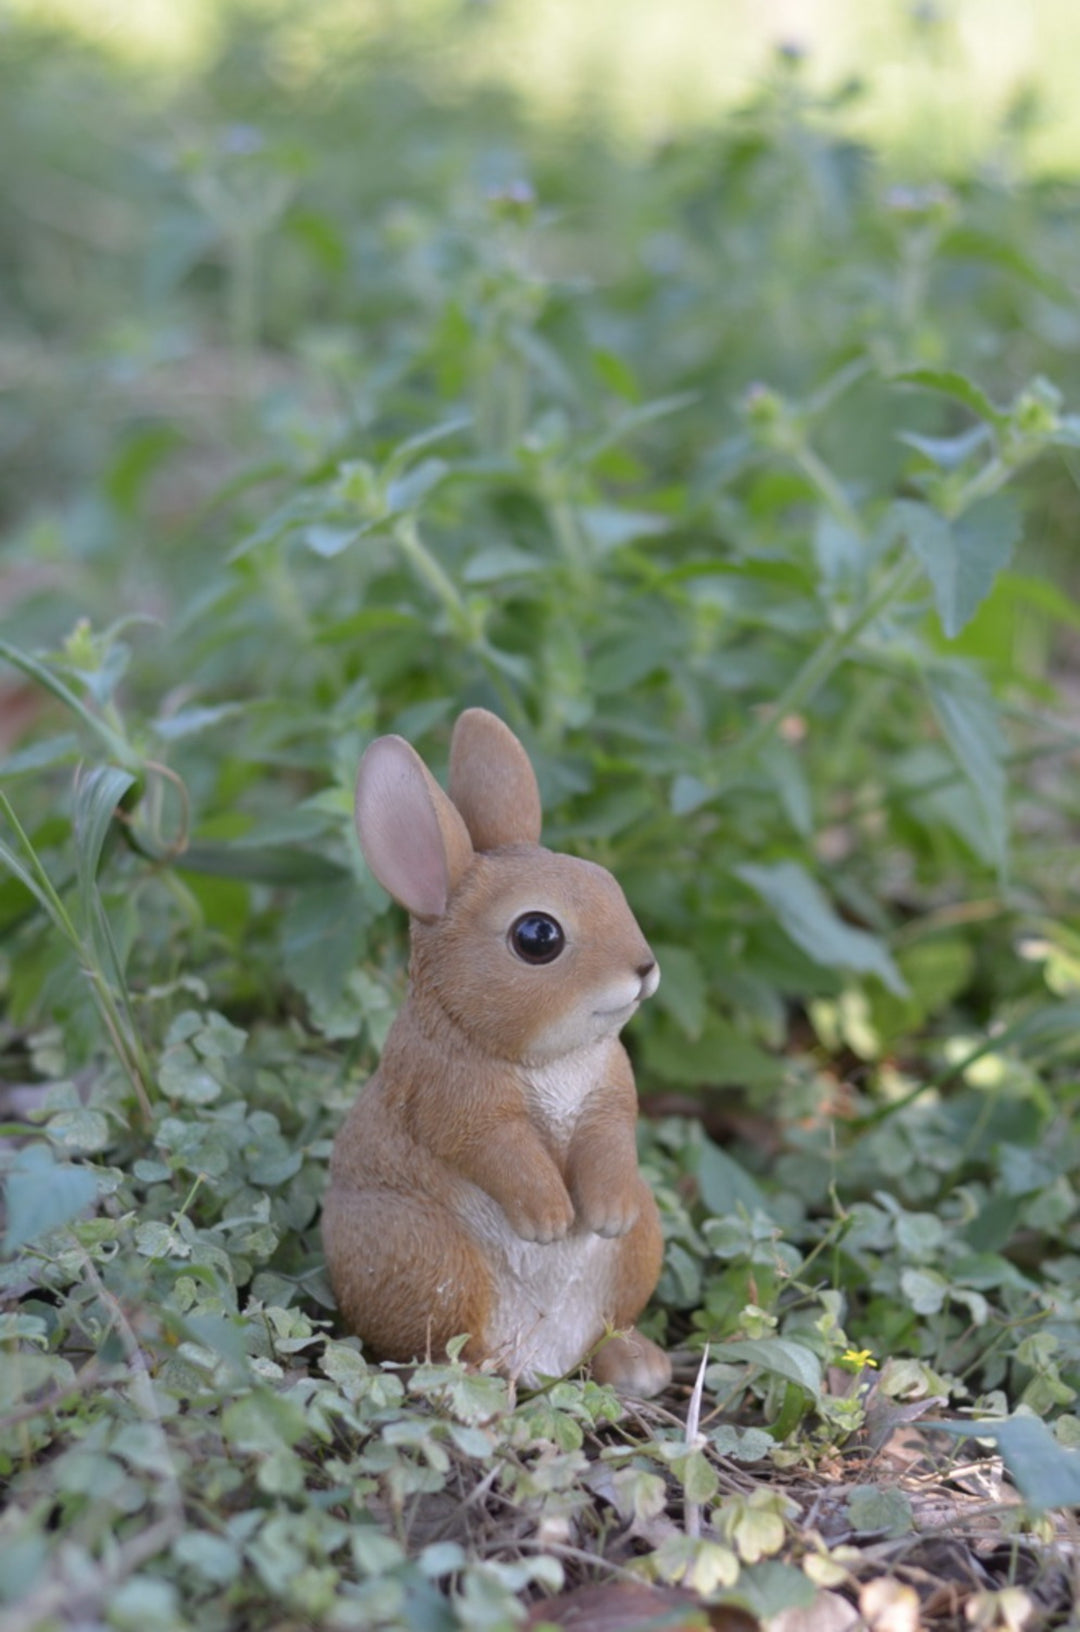 Small Standing Rabbit Hi-Line Gift Ltd.